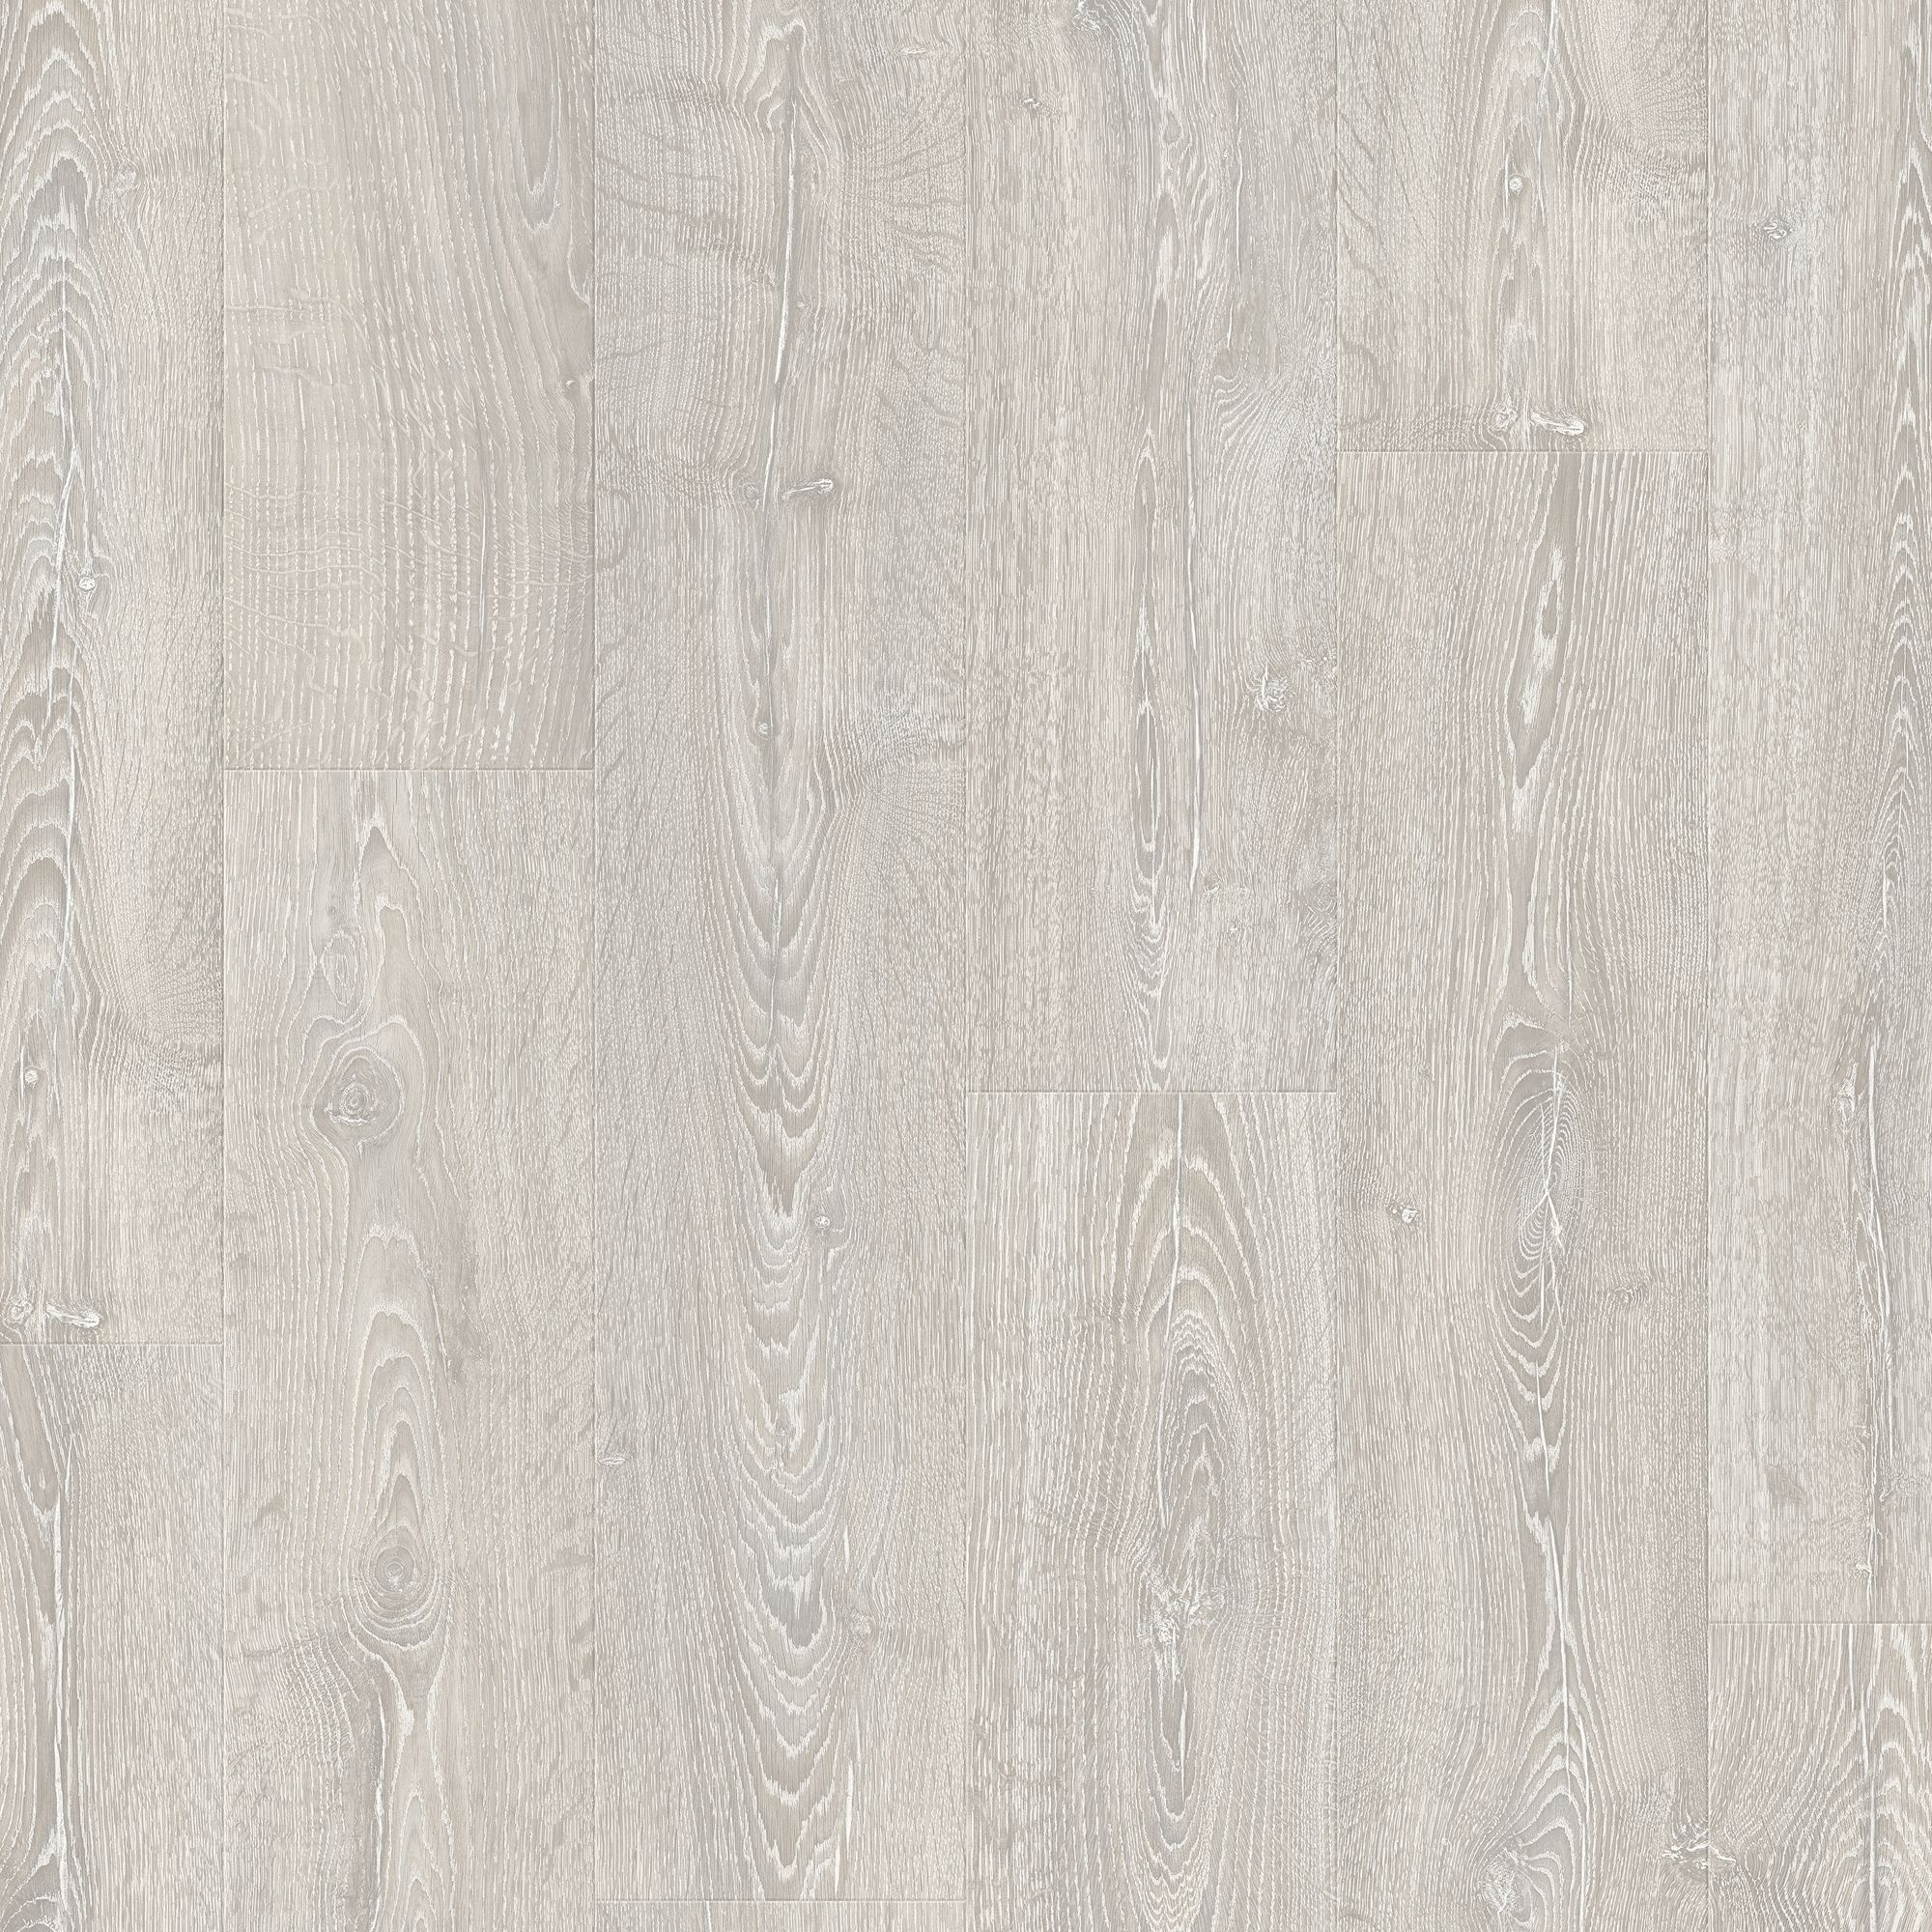 Quick-step Aquanto Grey Oak effect Laminate Flooring, 1.835m²